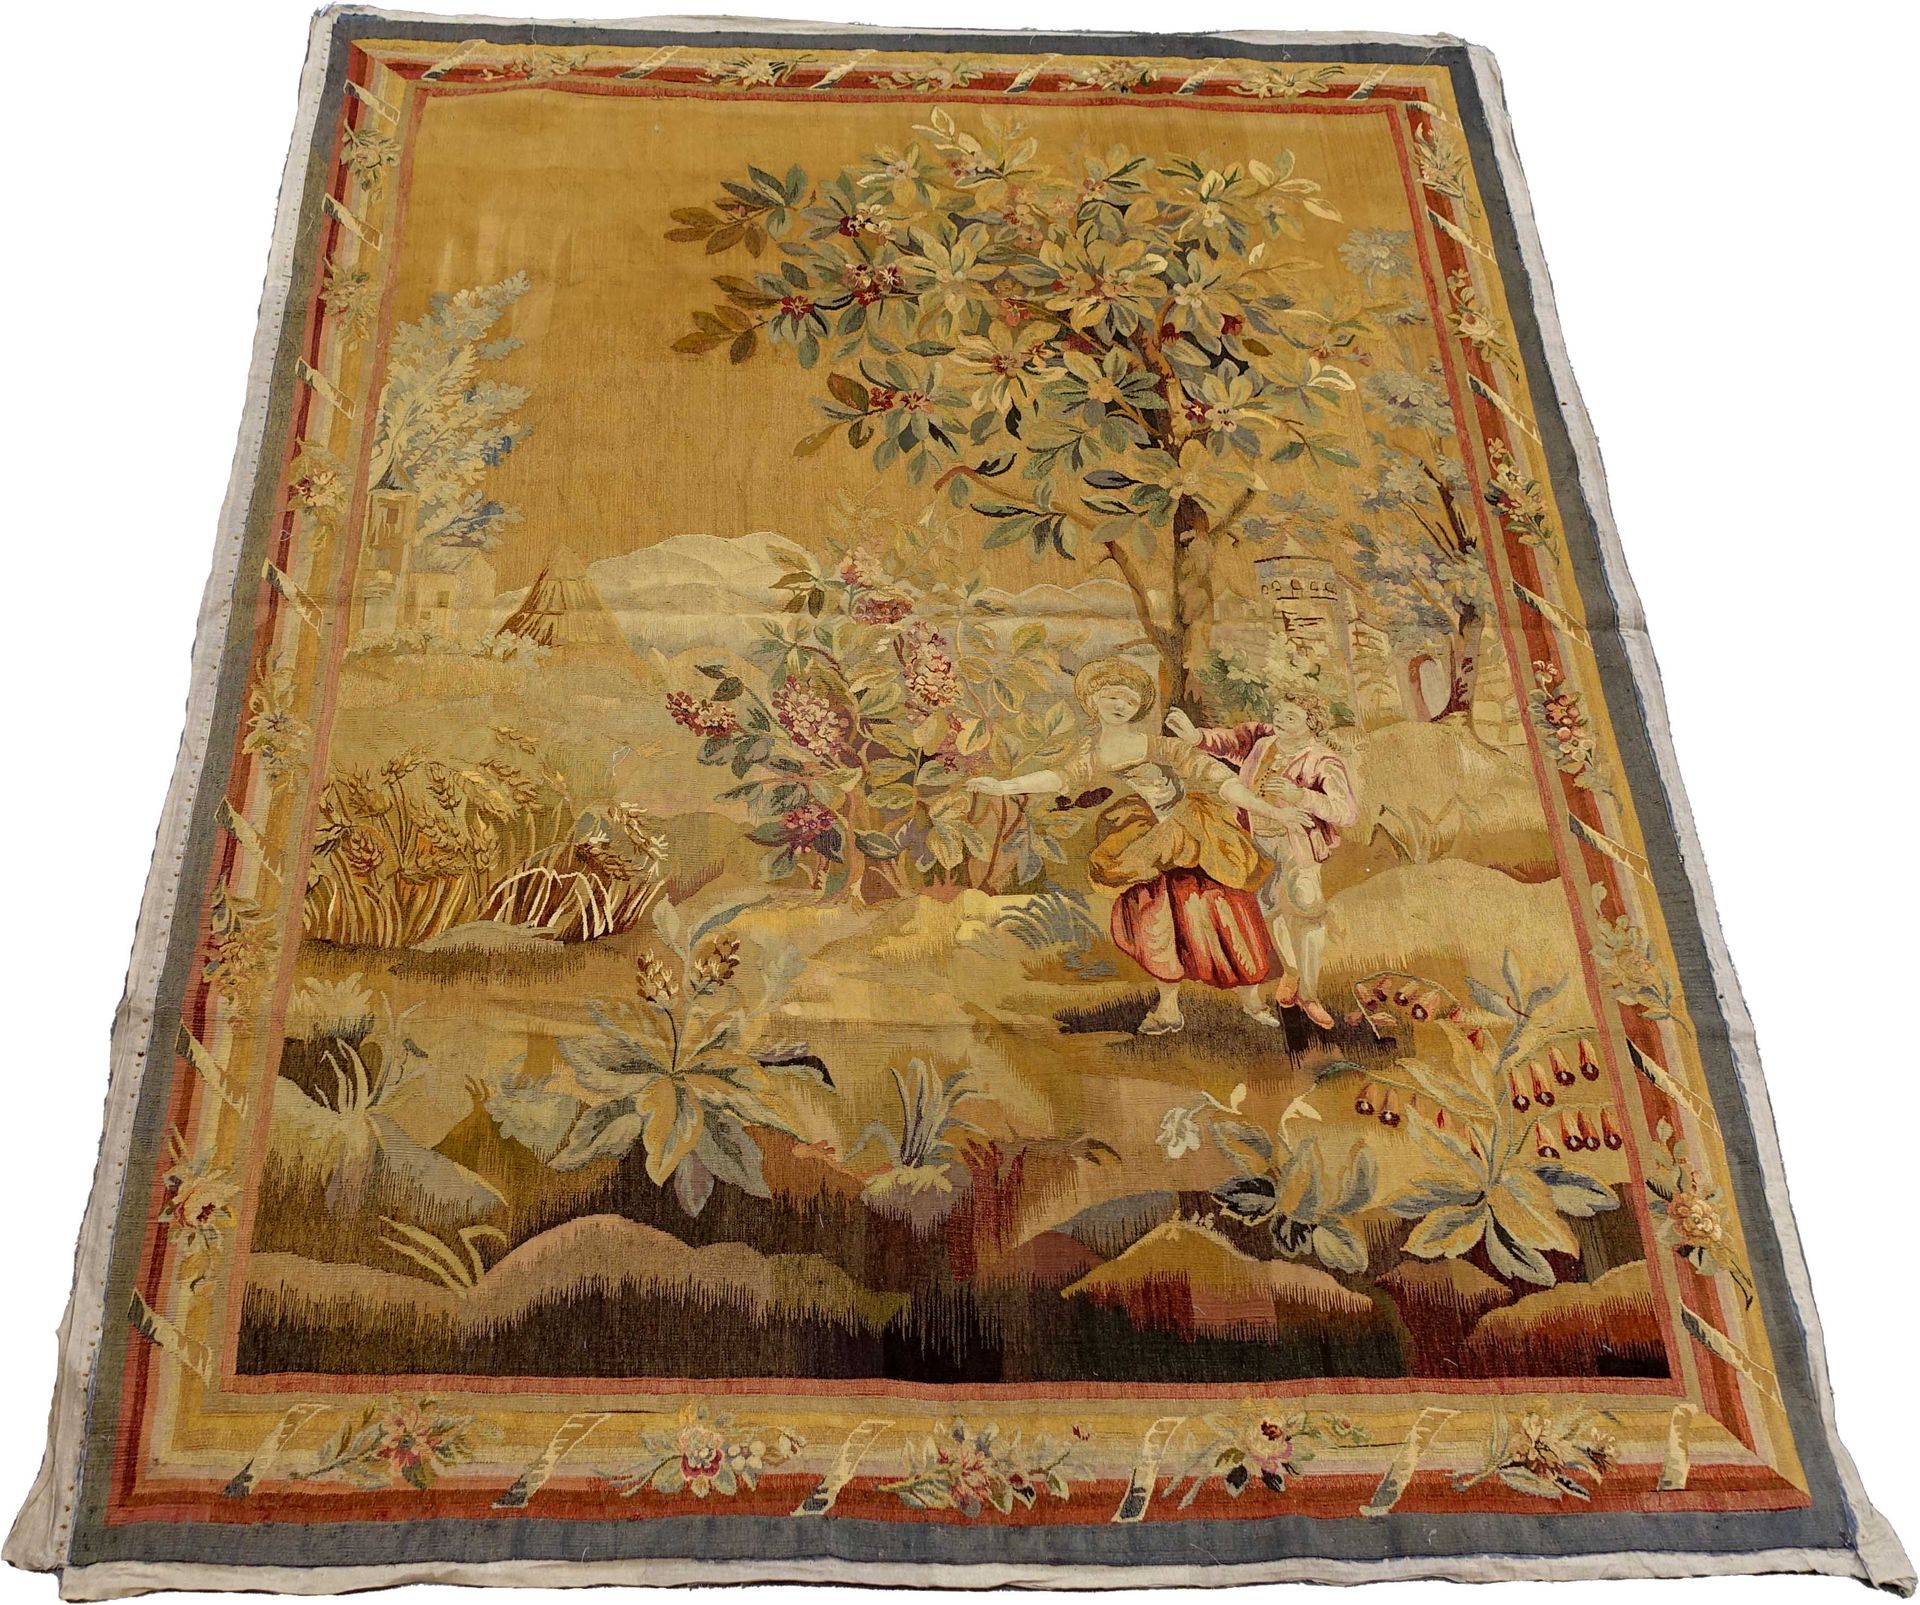 Tapisserie. 它展示了一对在乡村风景中的夫妇。花卉边框。19世纪的作品。